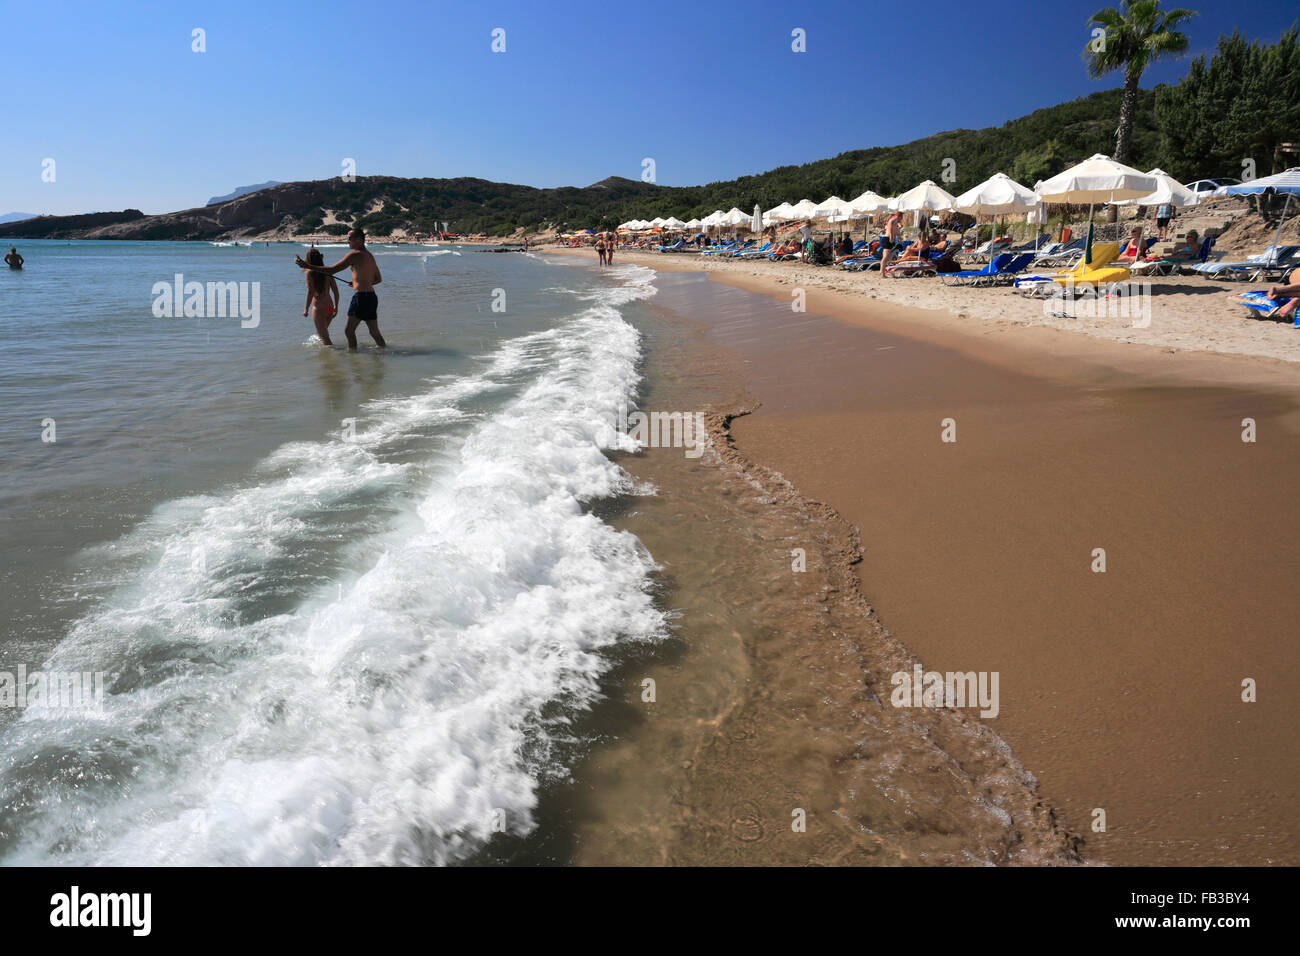 Summer, Paradise Beach, Kefalos Bay, Kefalos town, Kos Island, Dodecanese group of islands, South Aegean Sea, Greece. Stock Photo